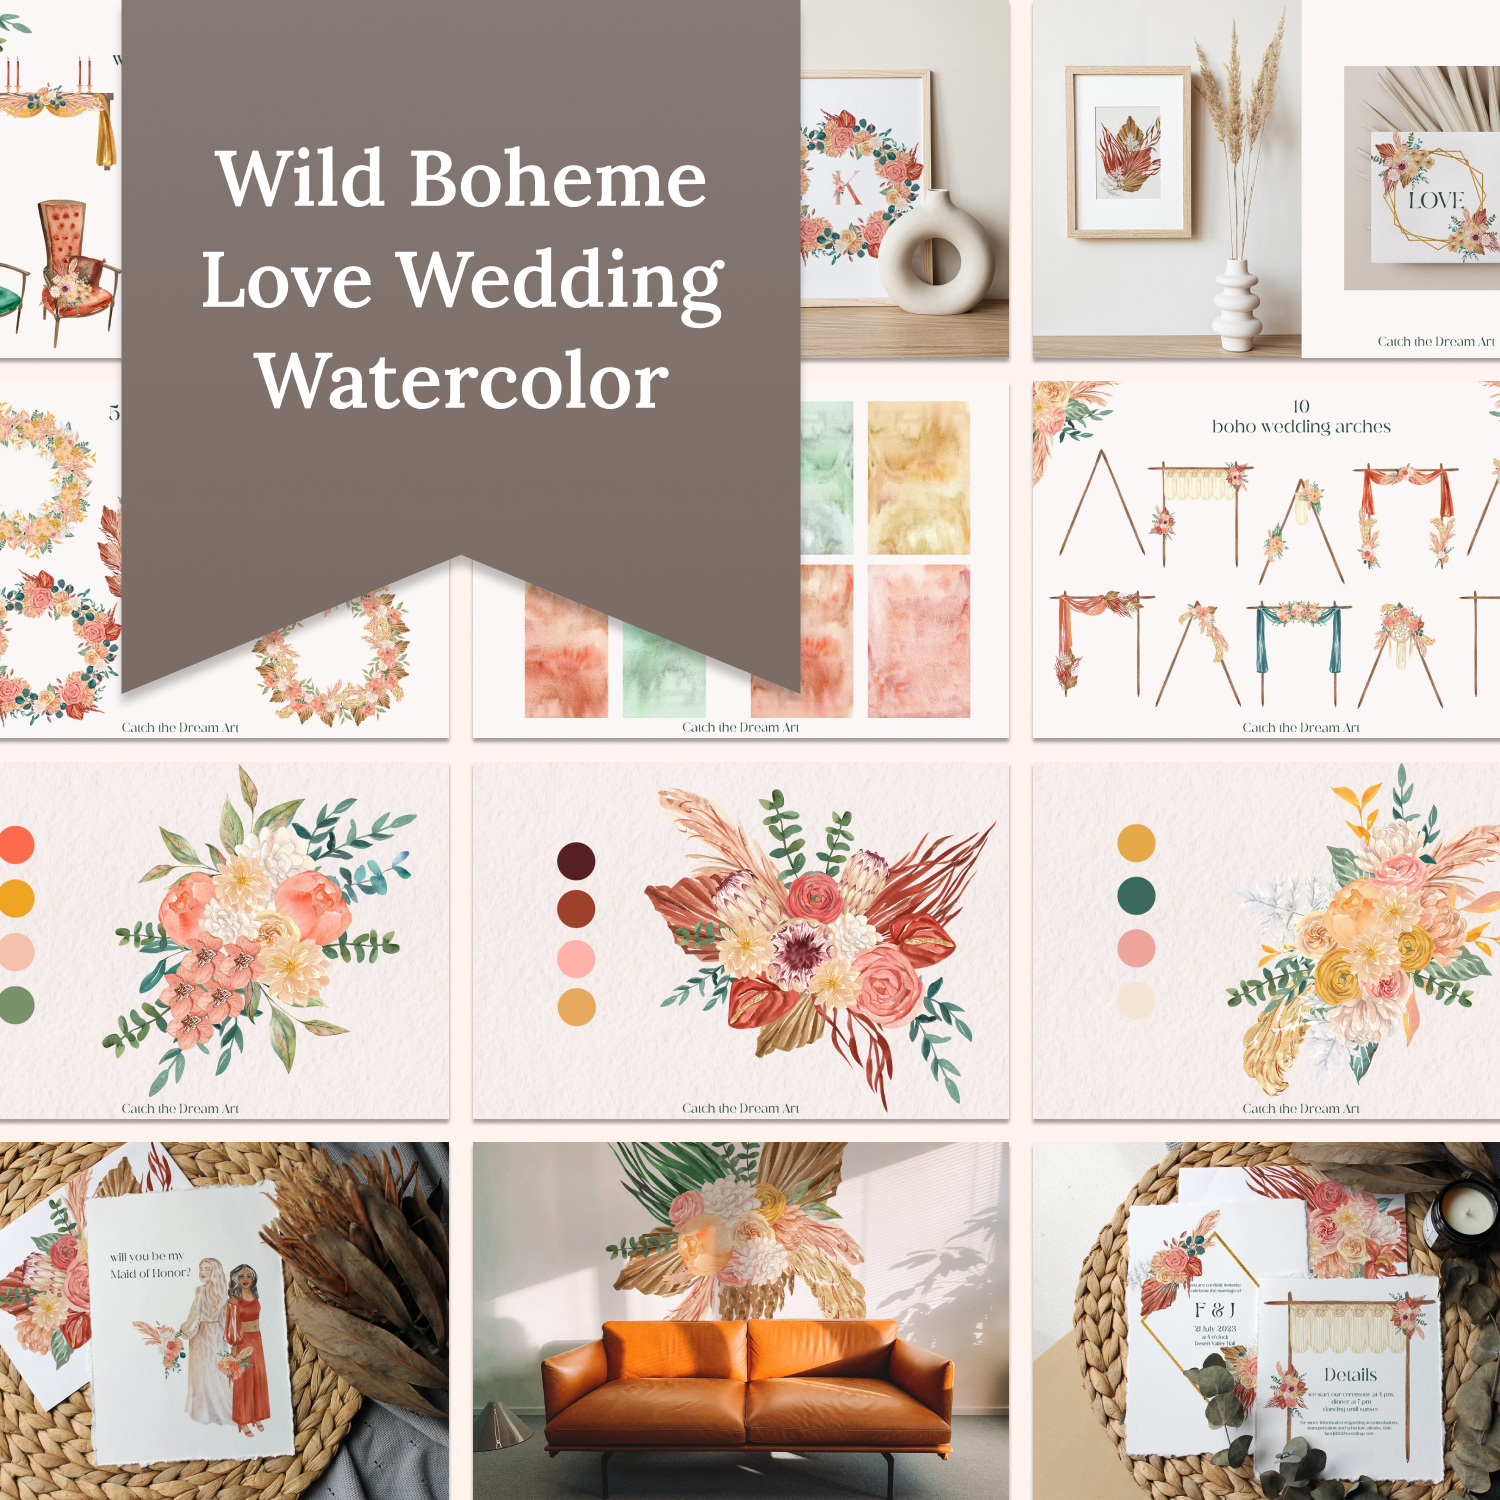 Prints of wild boheme love wedding watercolor.